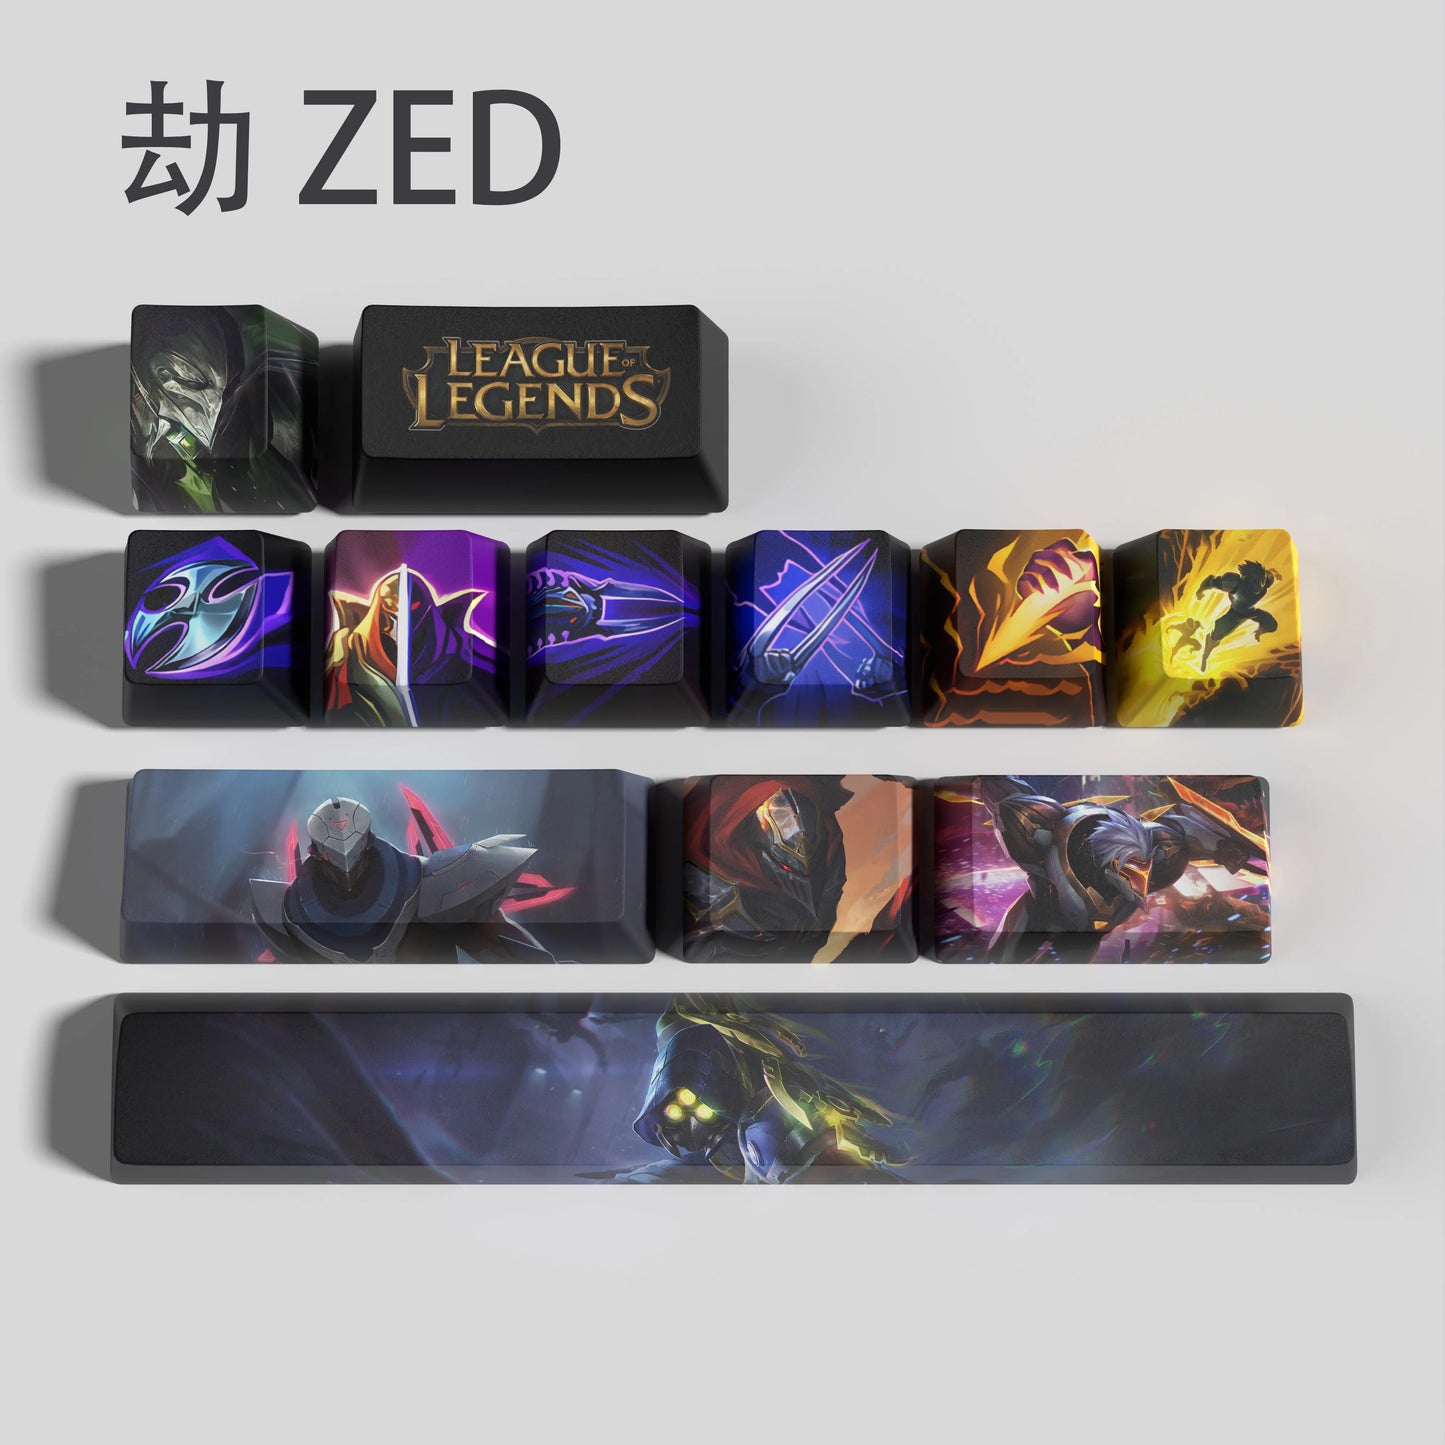 Zed keycaps